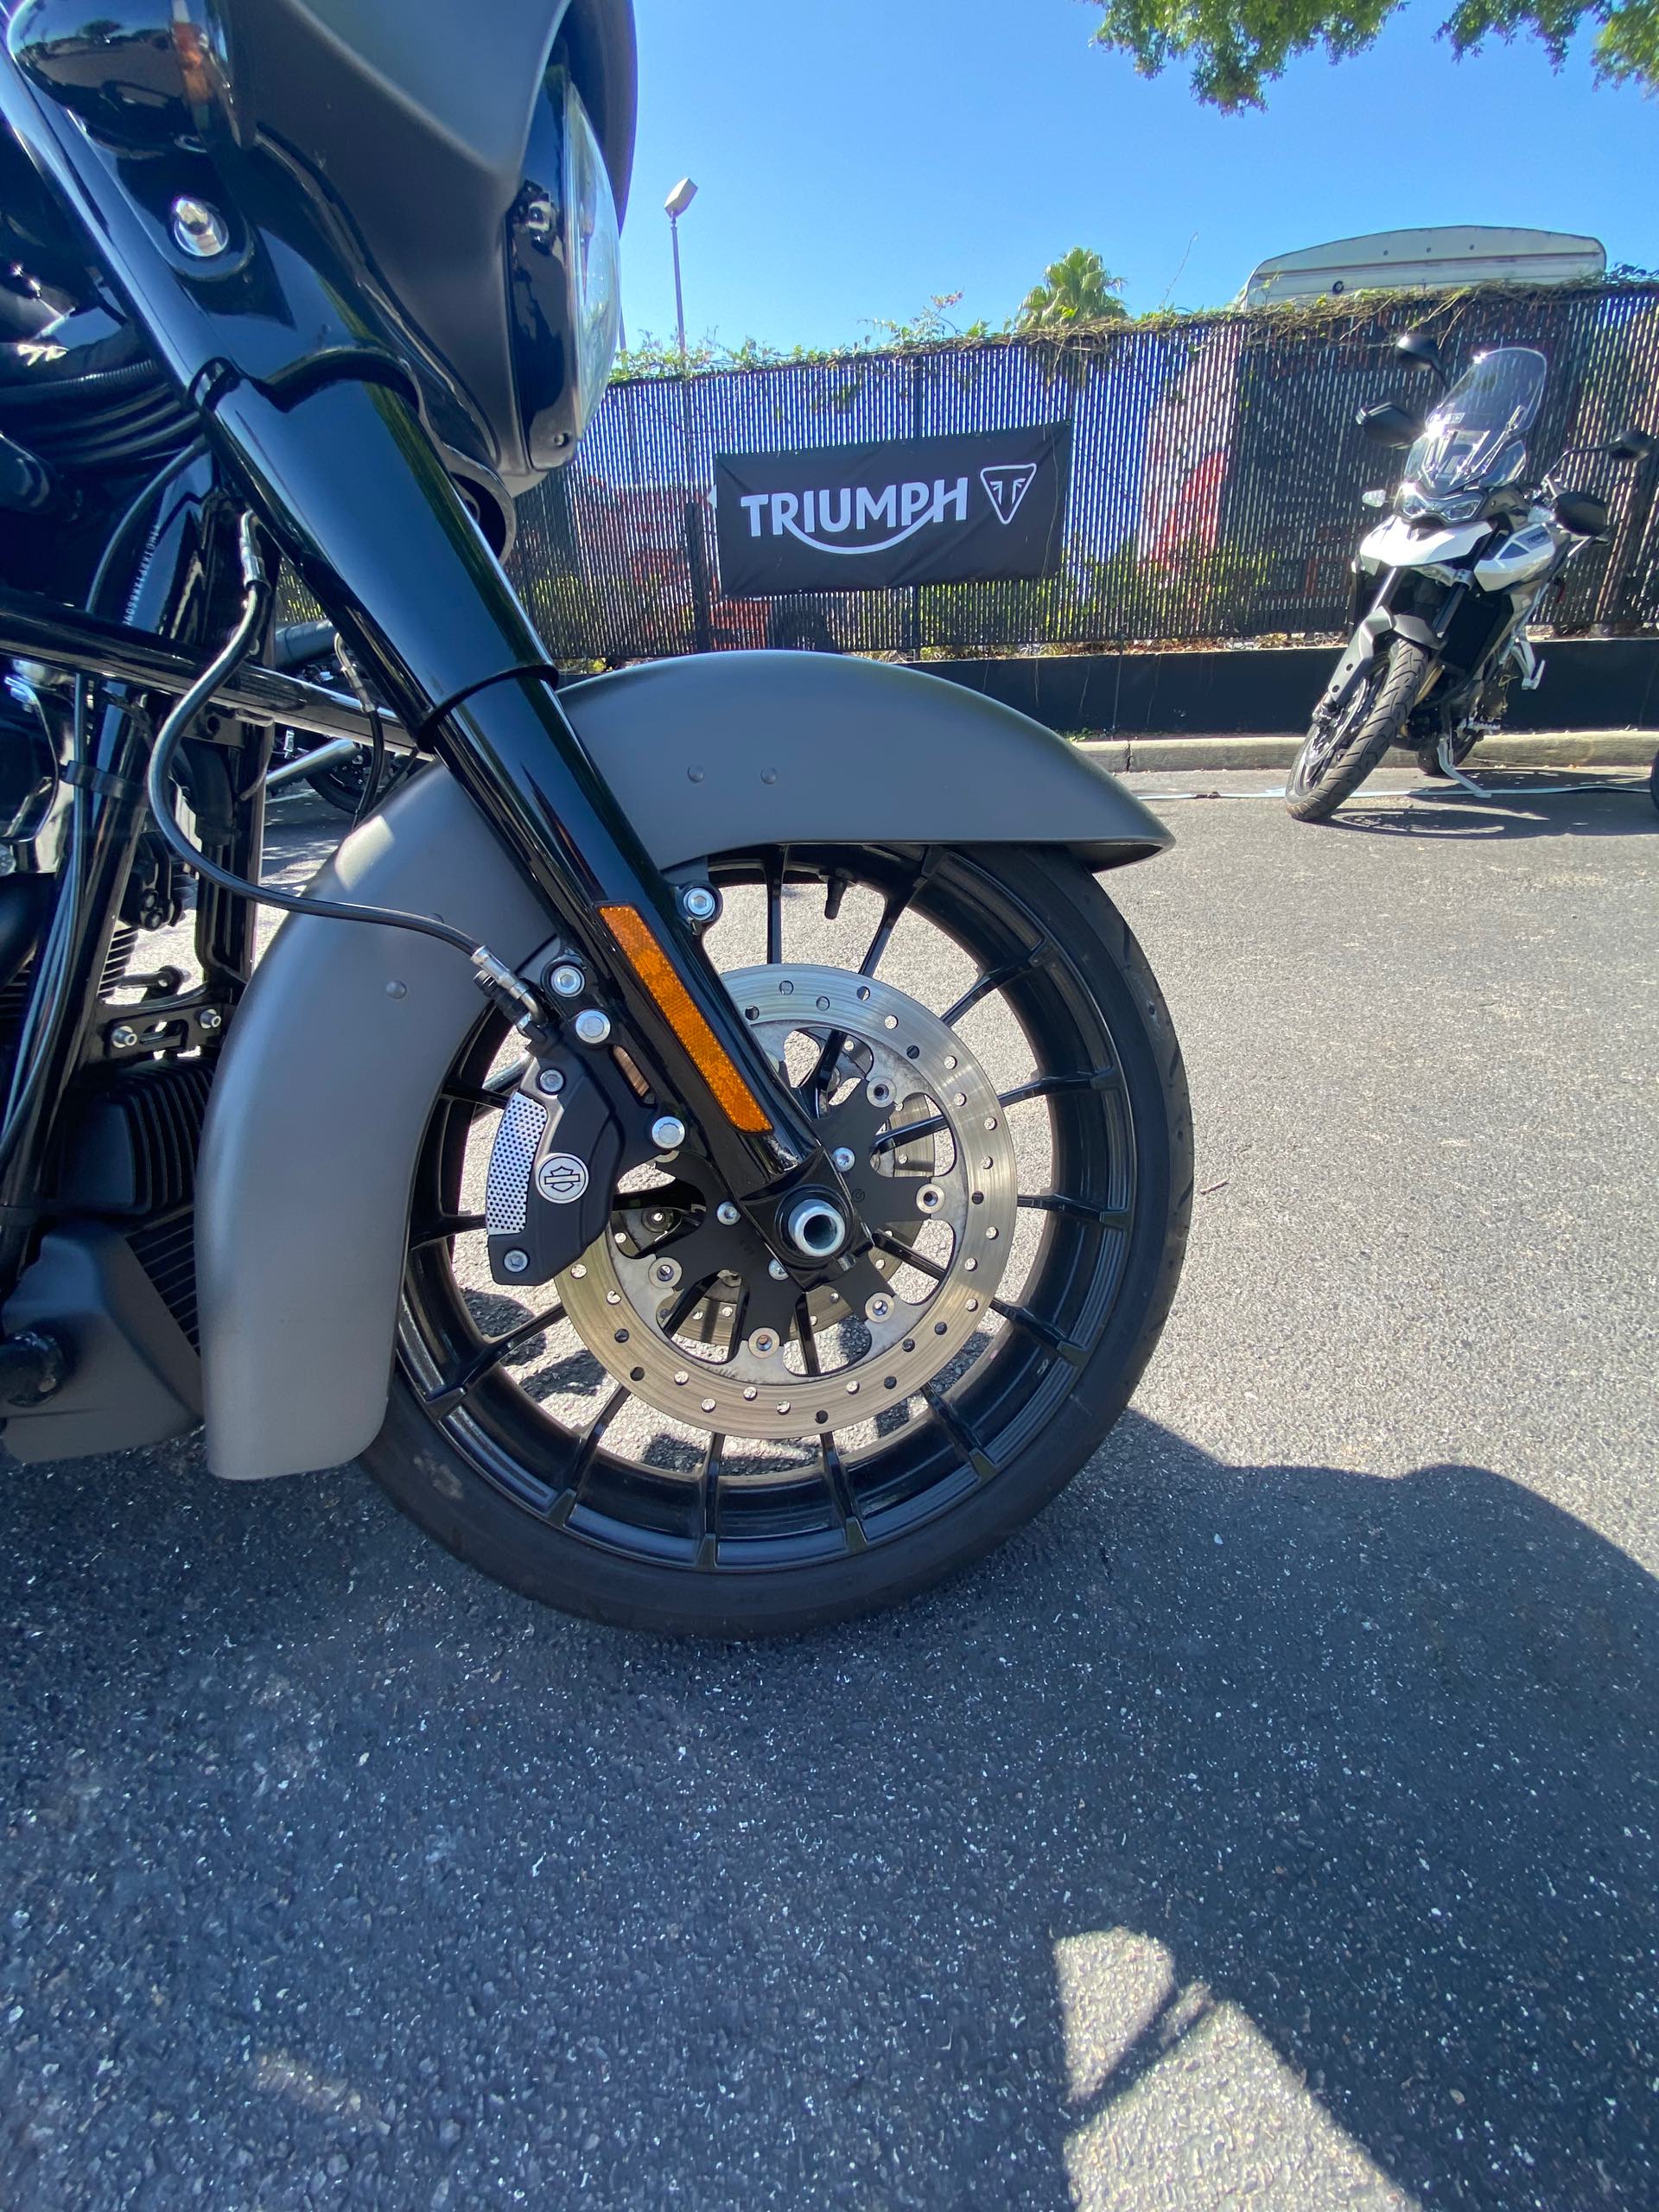 2019 Harley-Davidson Street Glide Special at Tampa Triumph, Tampa, FL 33614